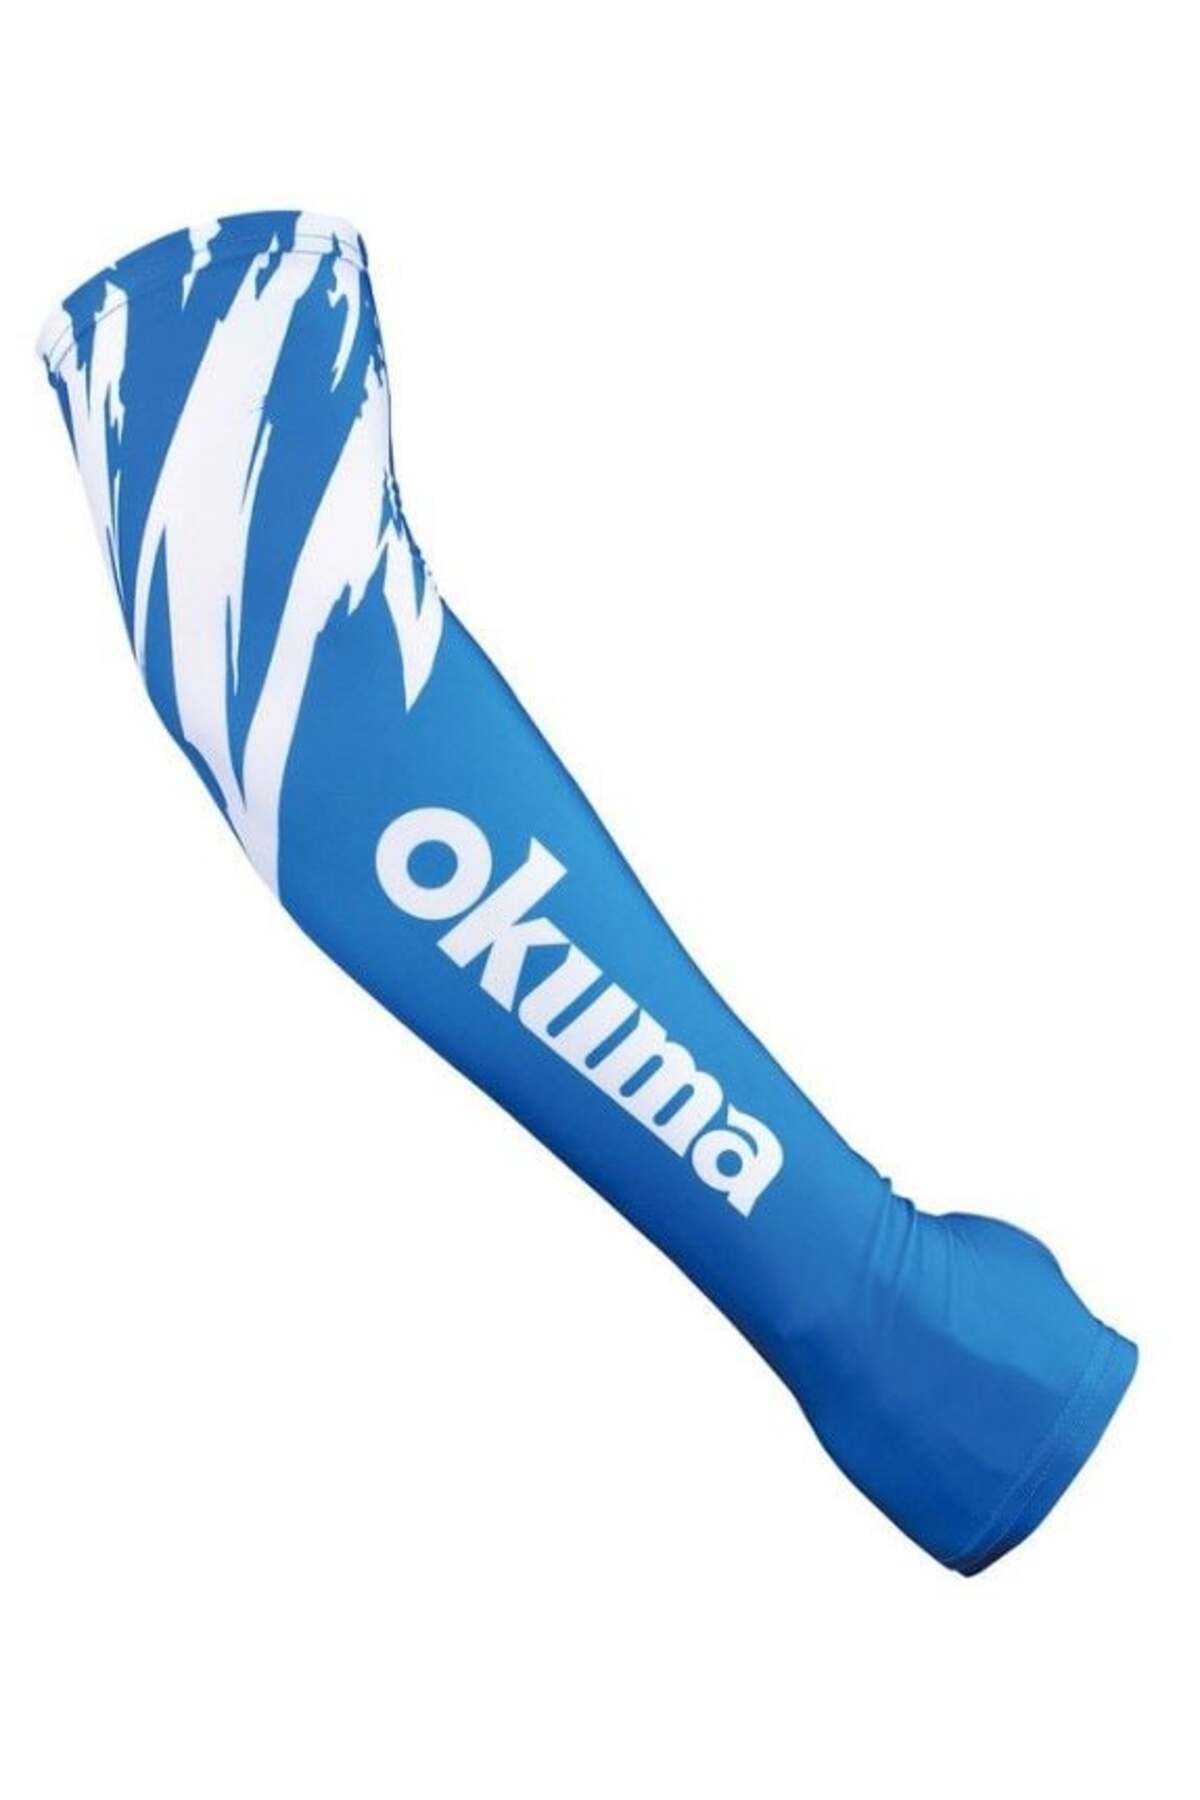 Okuma Blue Motif Sleeves S